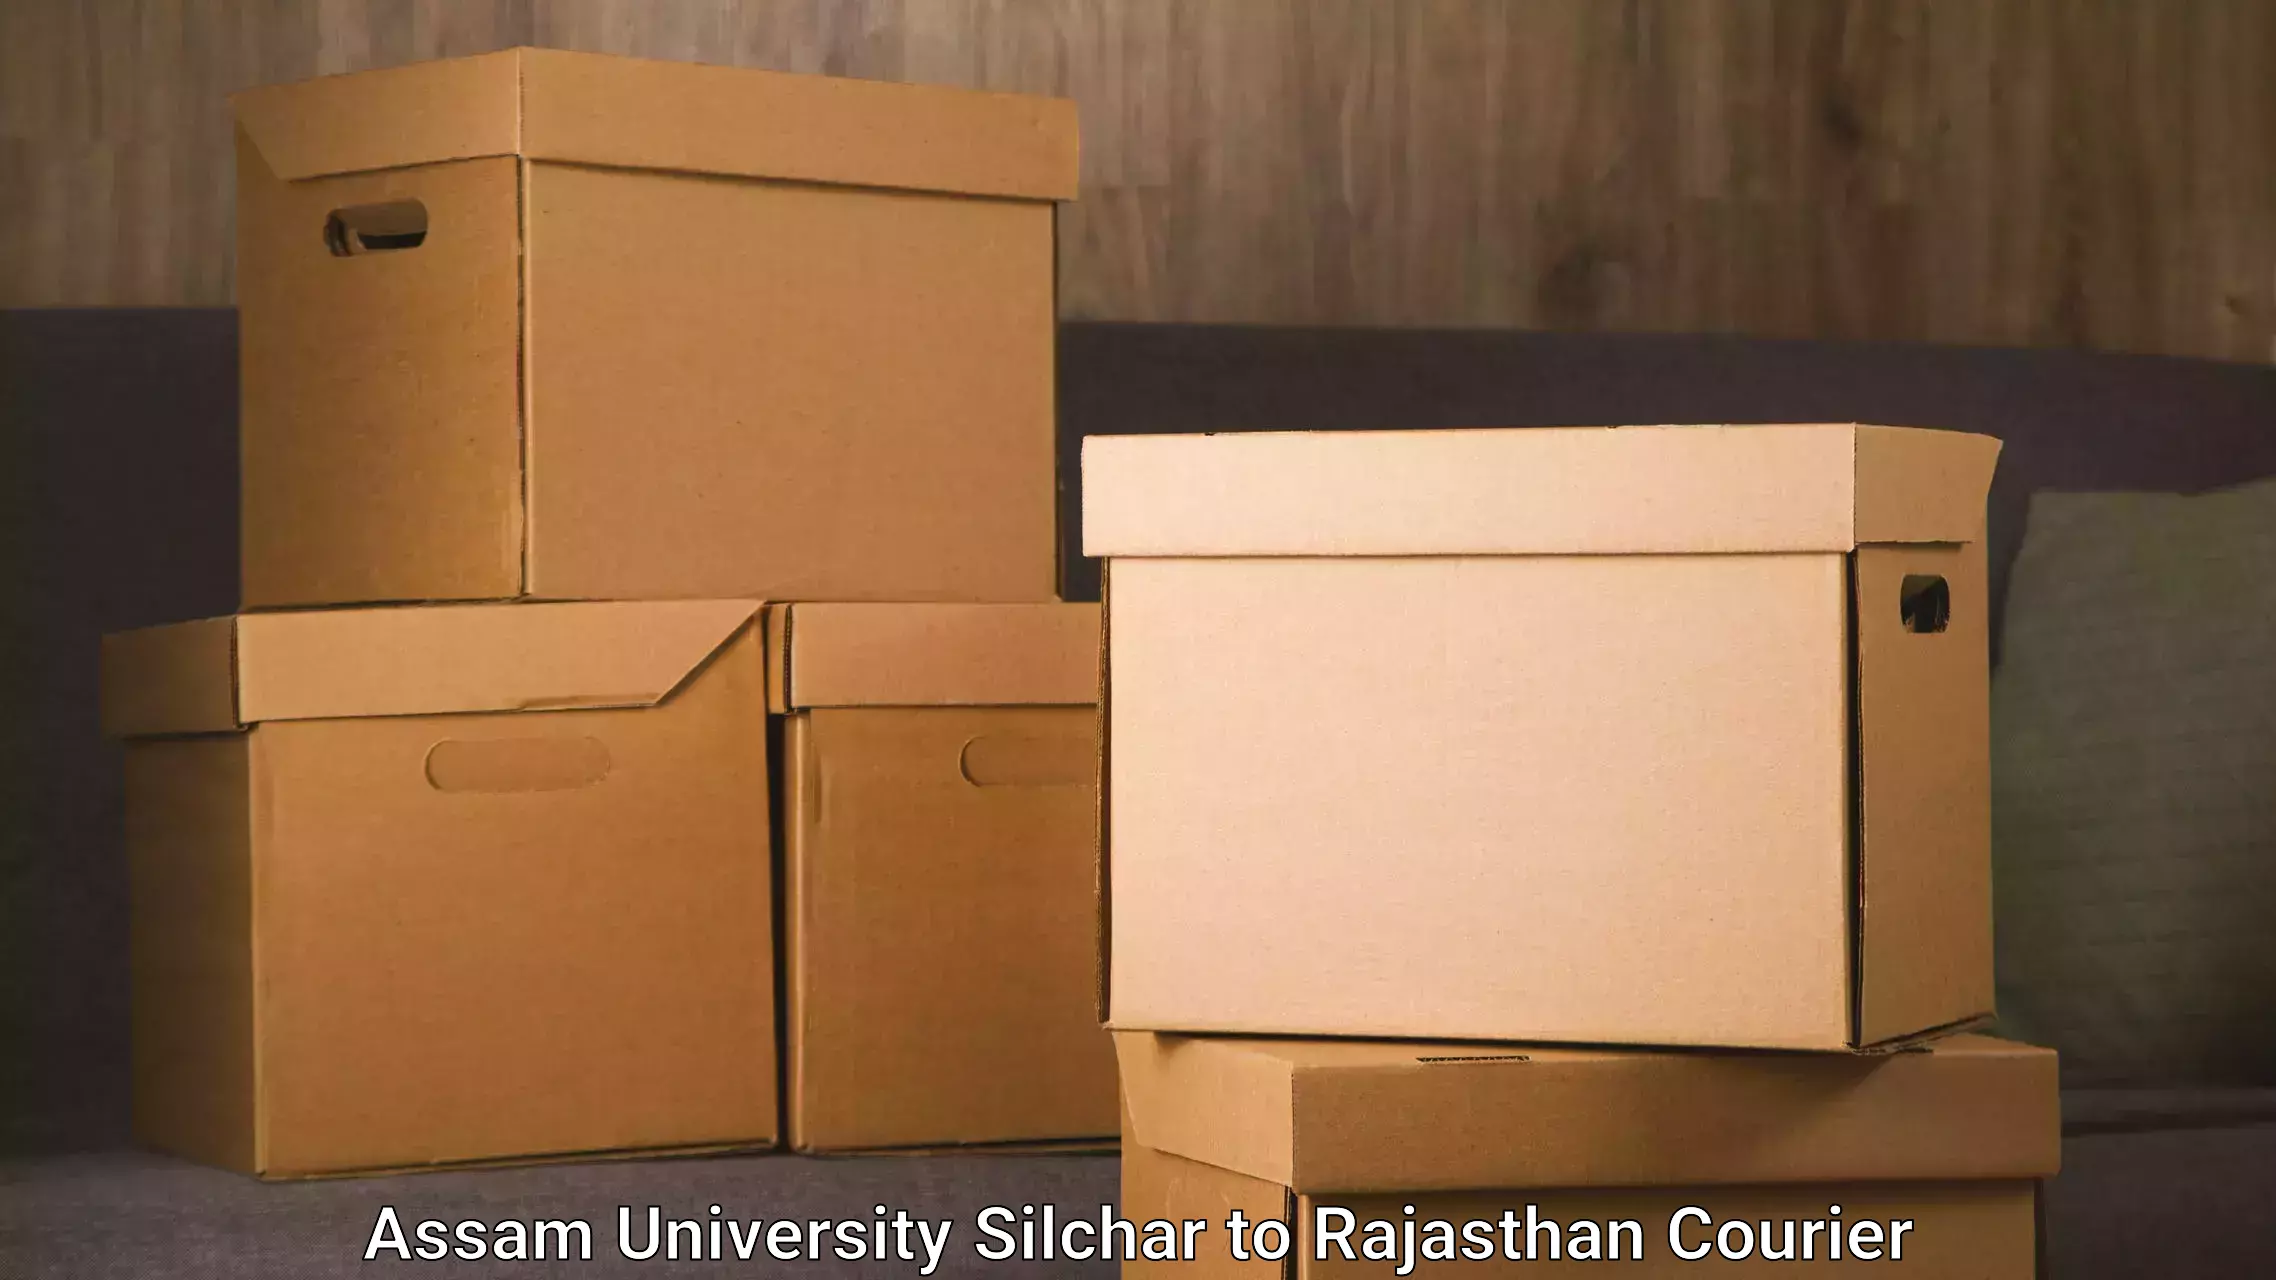 Global courier networks Assam University Silchar to Asind